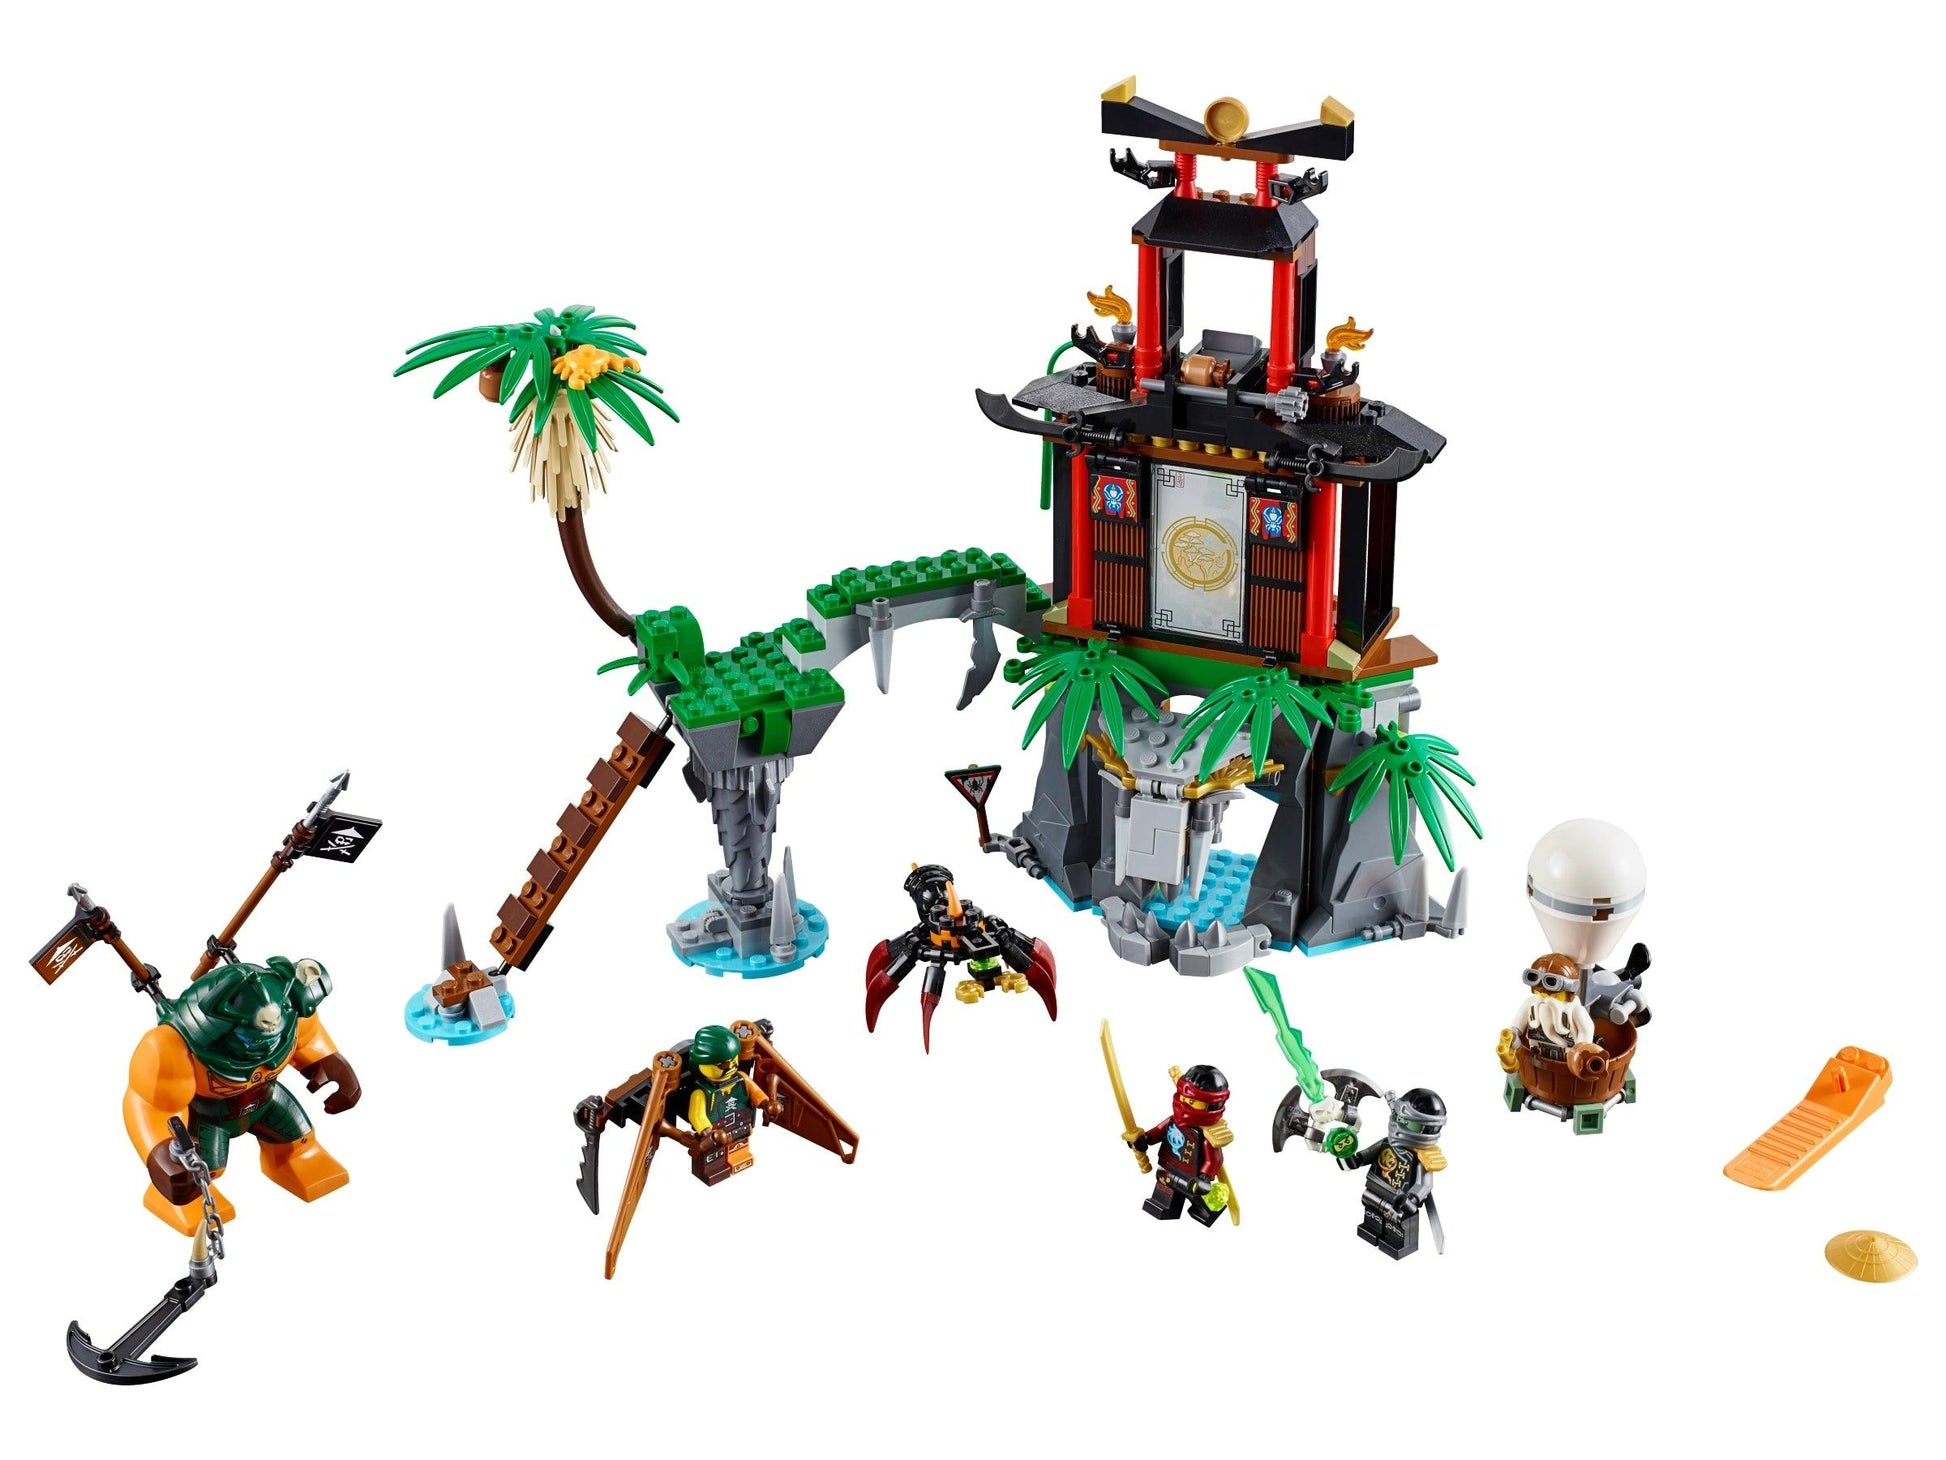 LEGO Tiger Widow Eiland 70604 Ninjago | 2TTOYS ✓ Official shop<br>